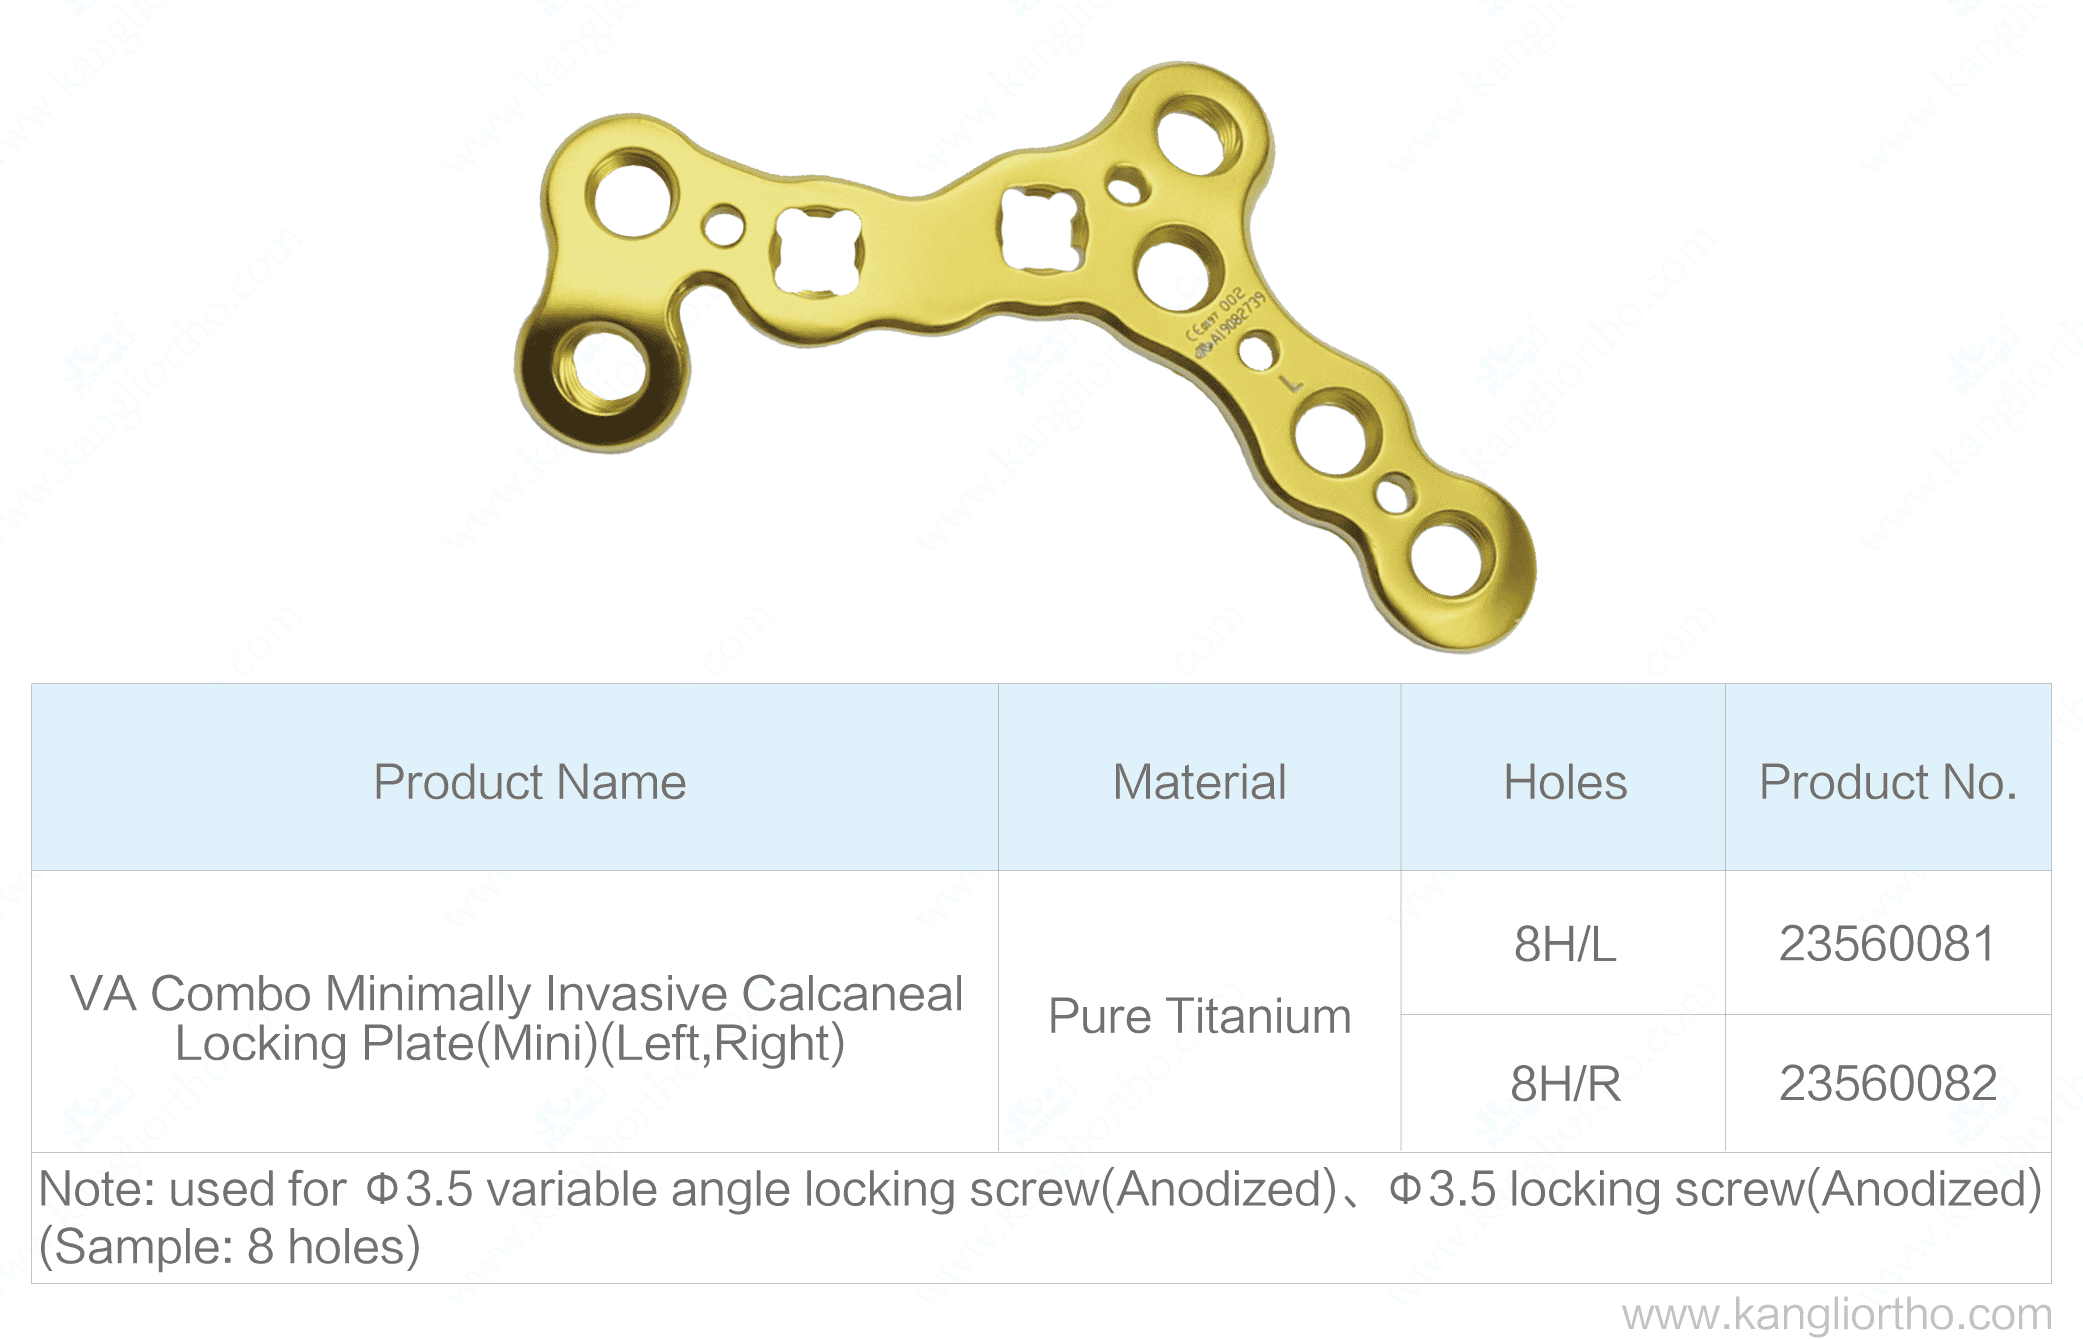 va-combo-minimally-invasive-calcaneal-locking-plate-mini-specifications